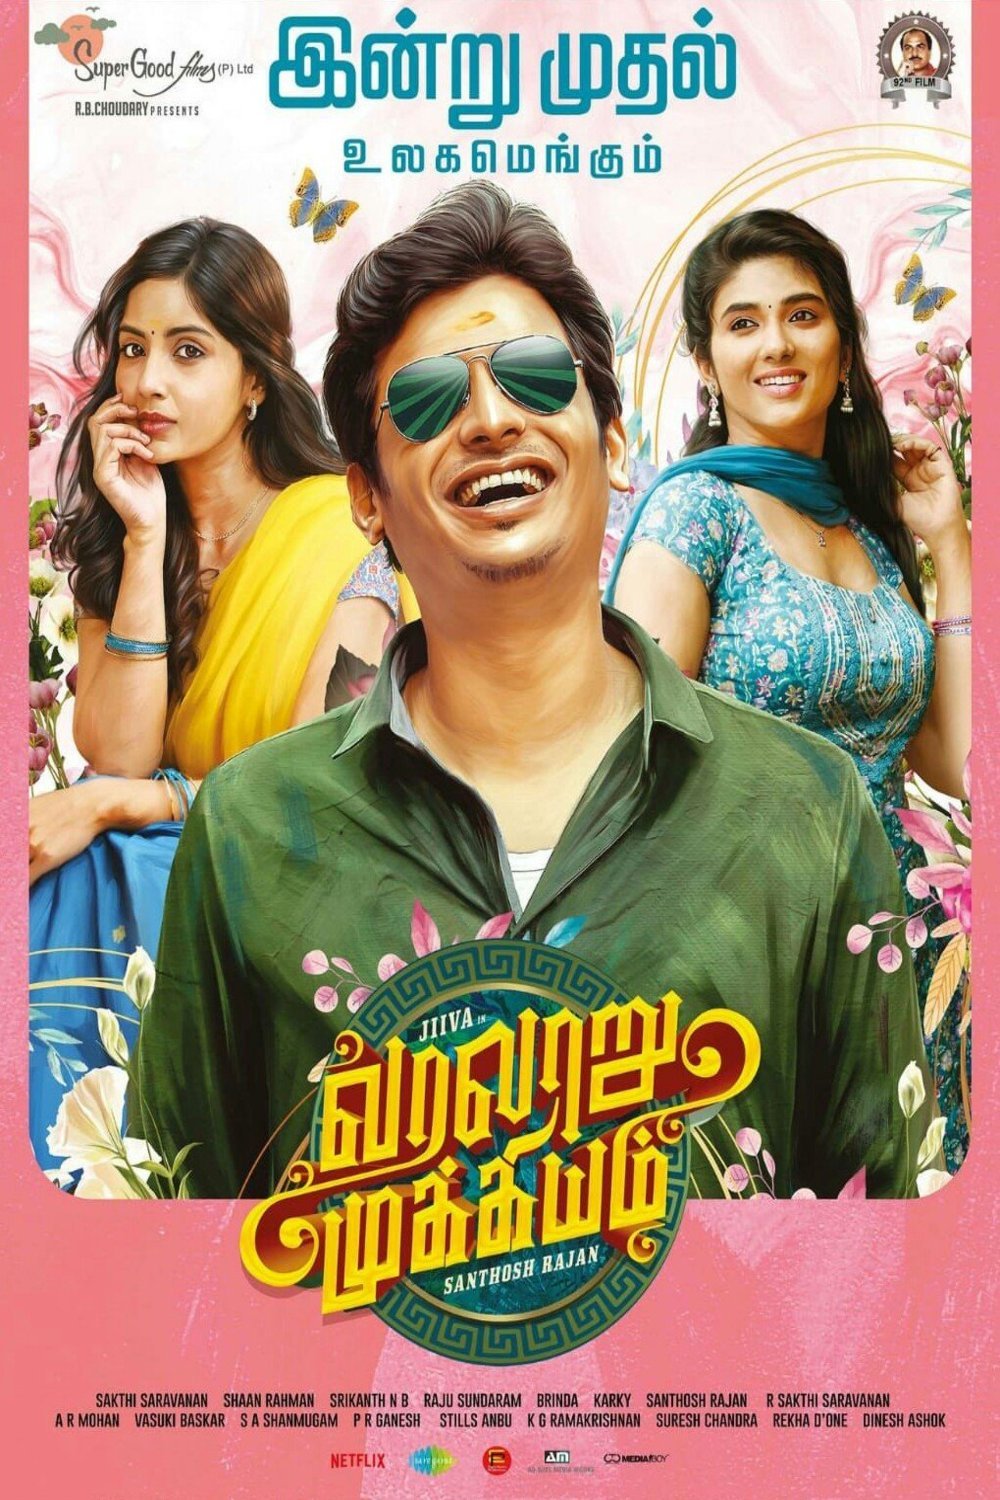 Tamil poster of the movie Varalaru Mukkiyam